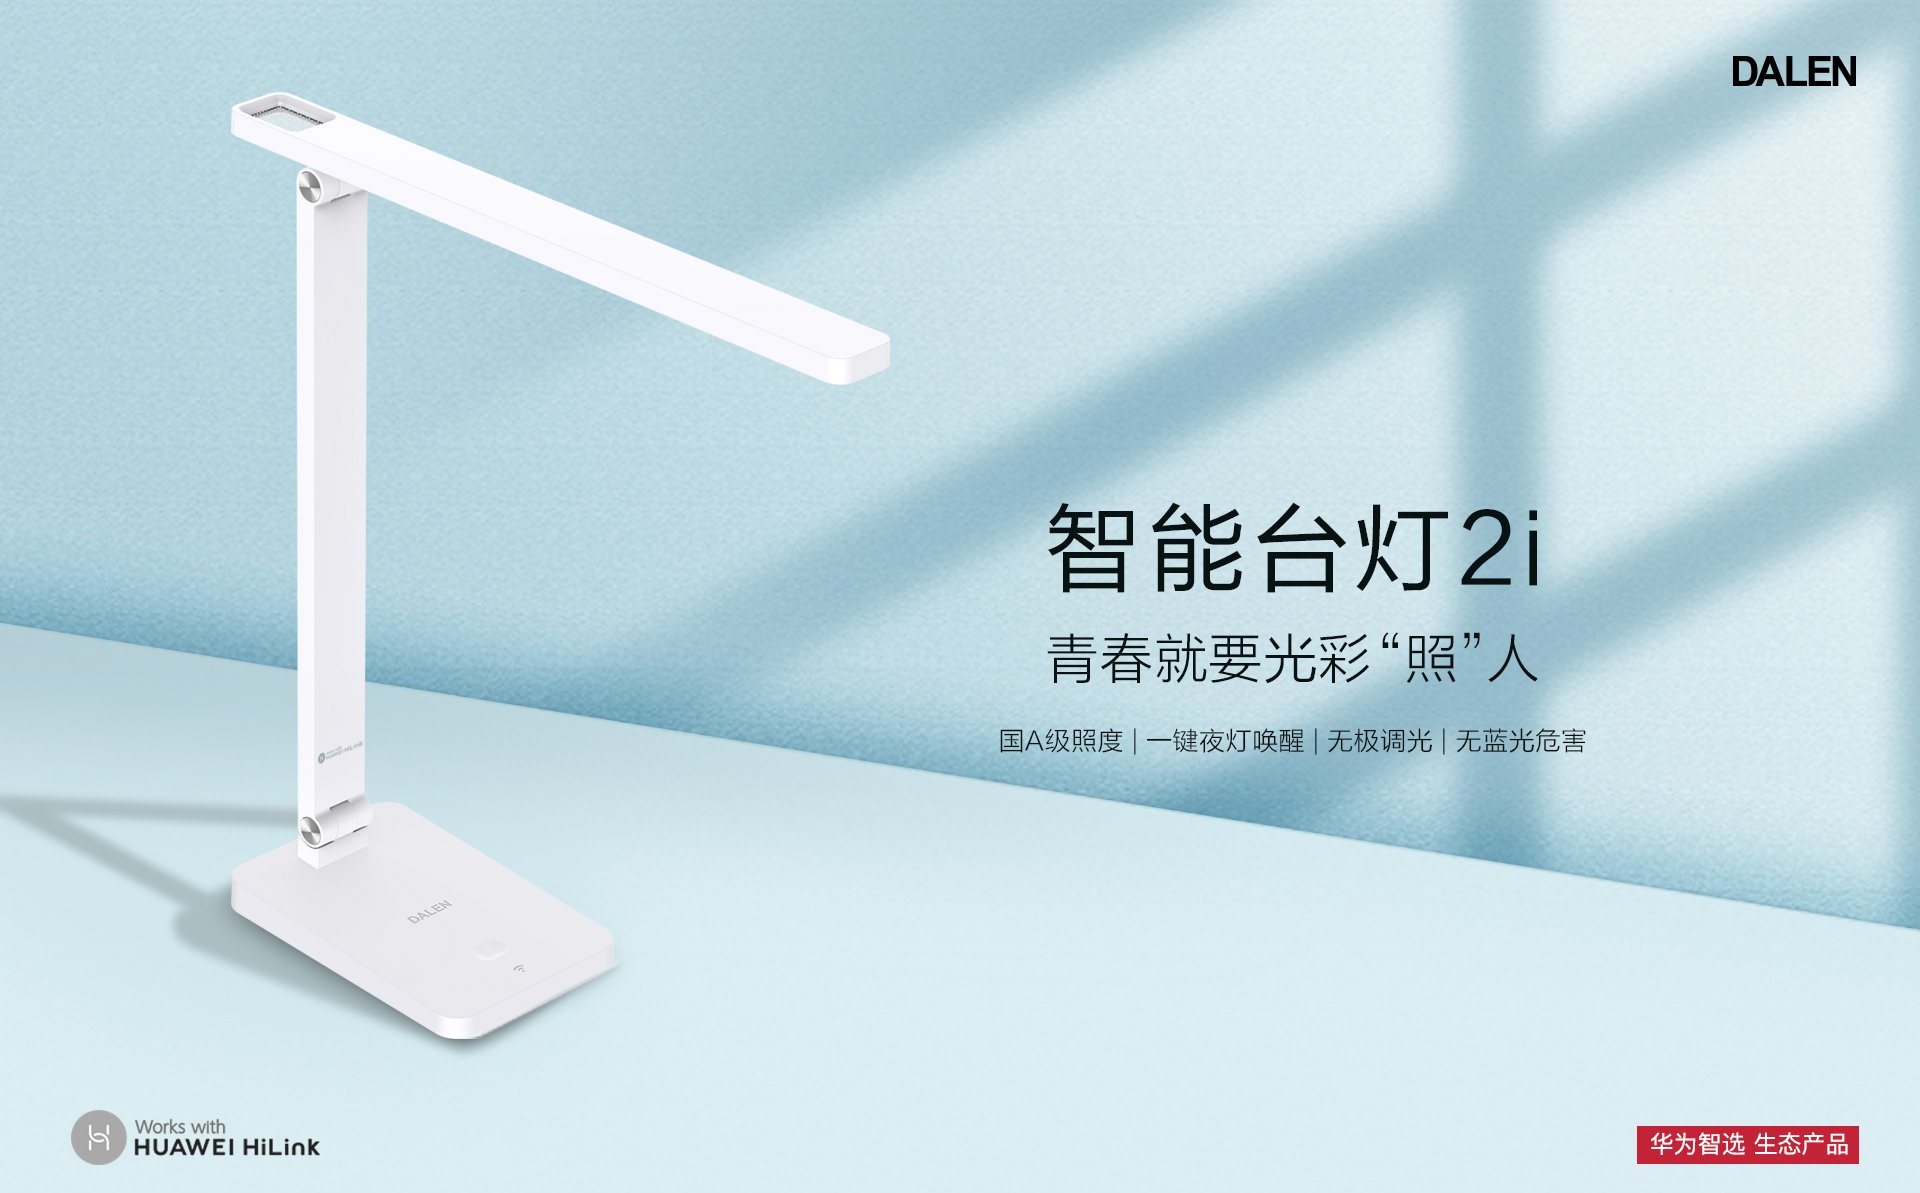 iHuawei Smart Select Darren Smart Desk Lamp 2i